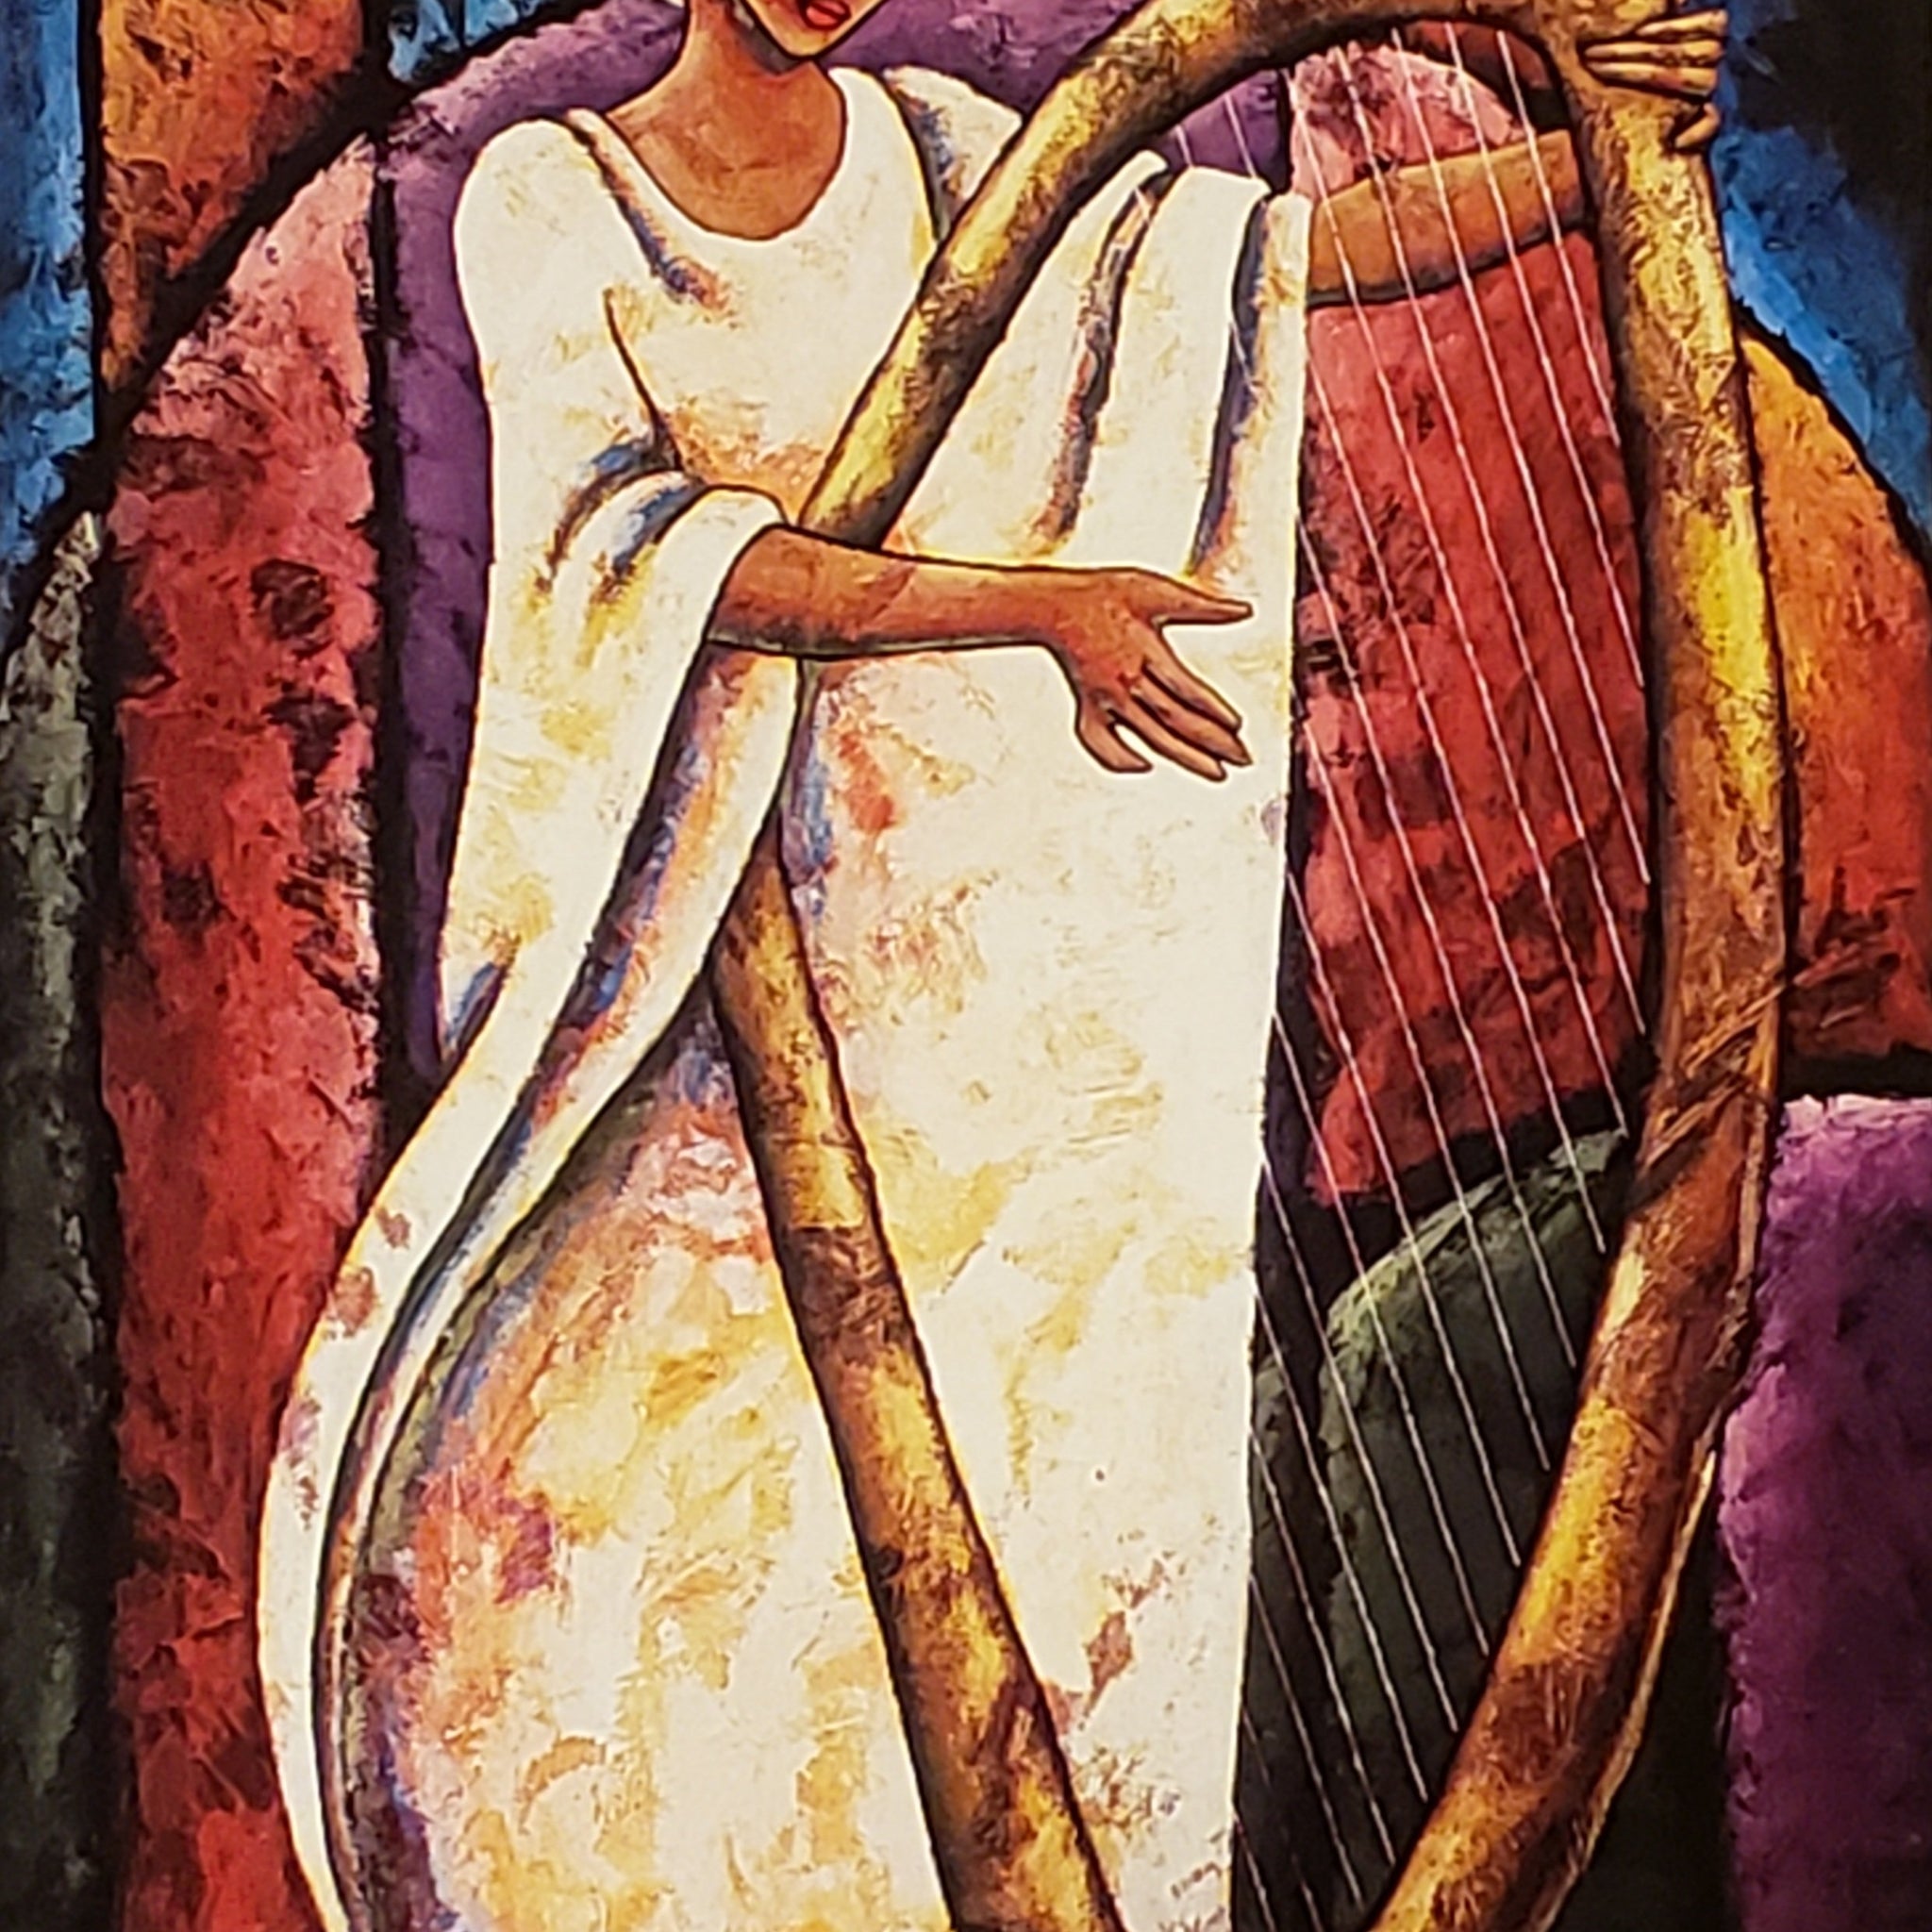 Harp Giclee on Canvas